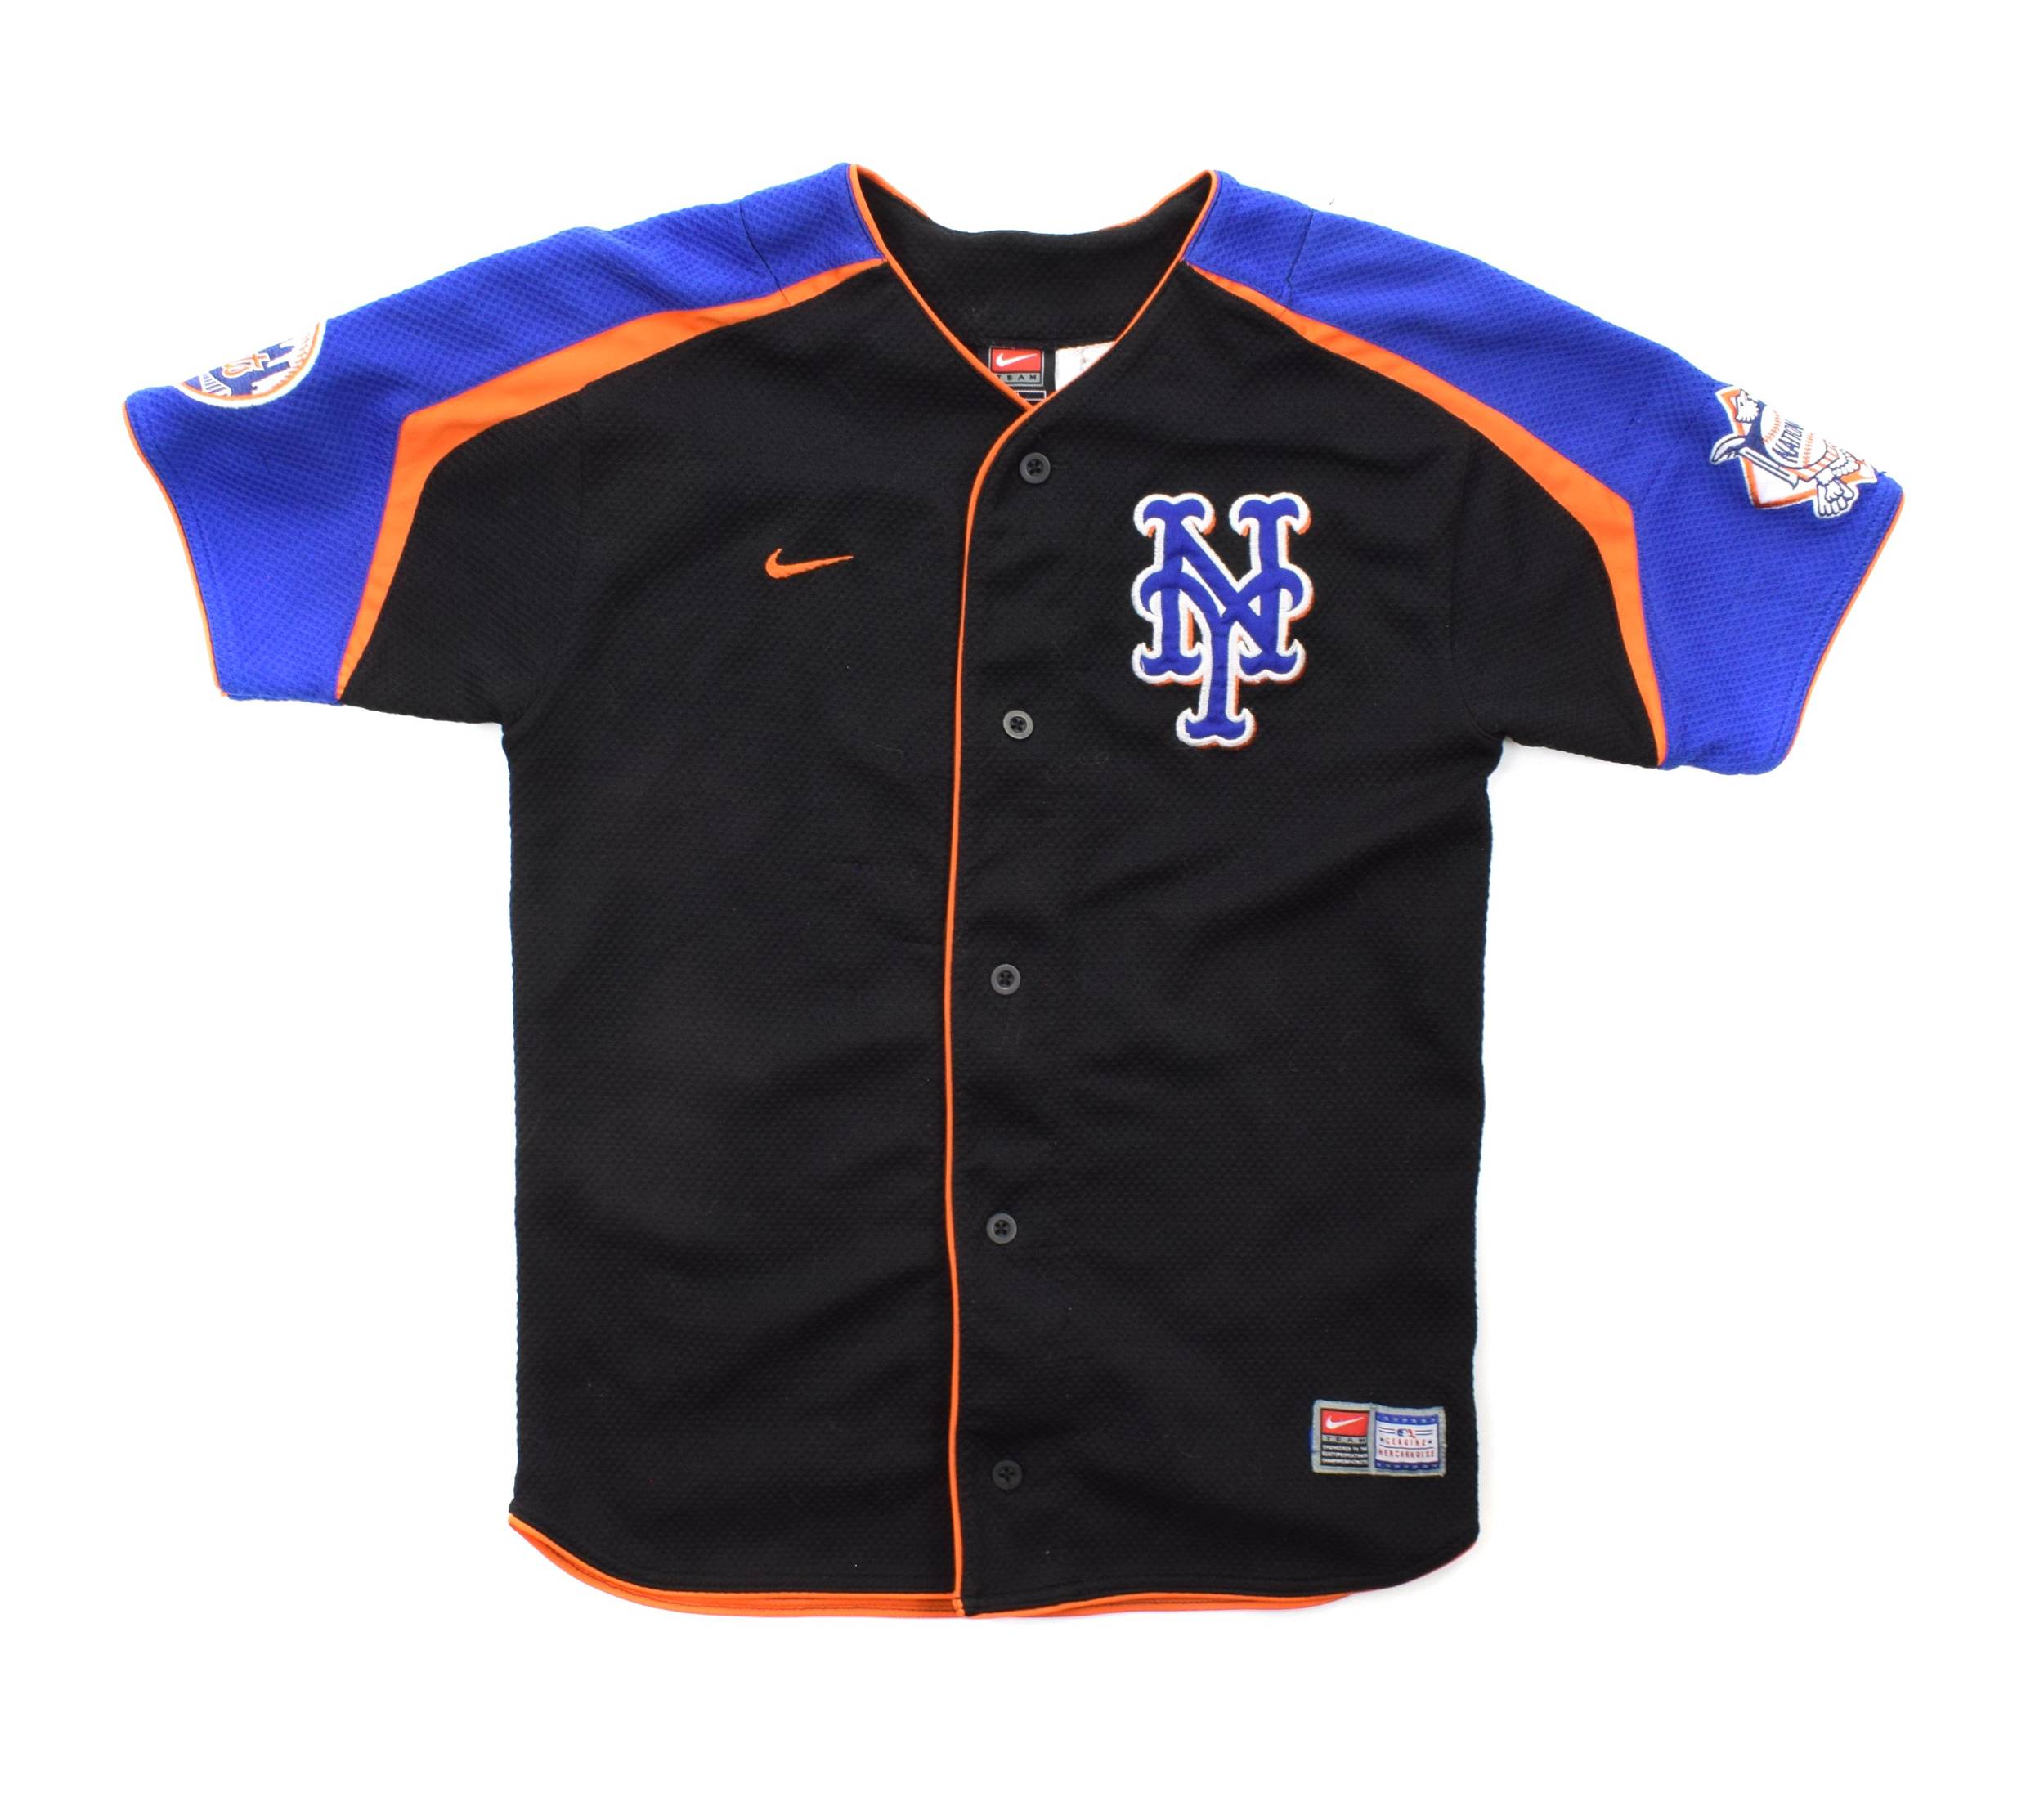 New York Mets Jersey, Mets Baseball Jerseys, Uniforms